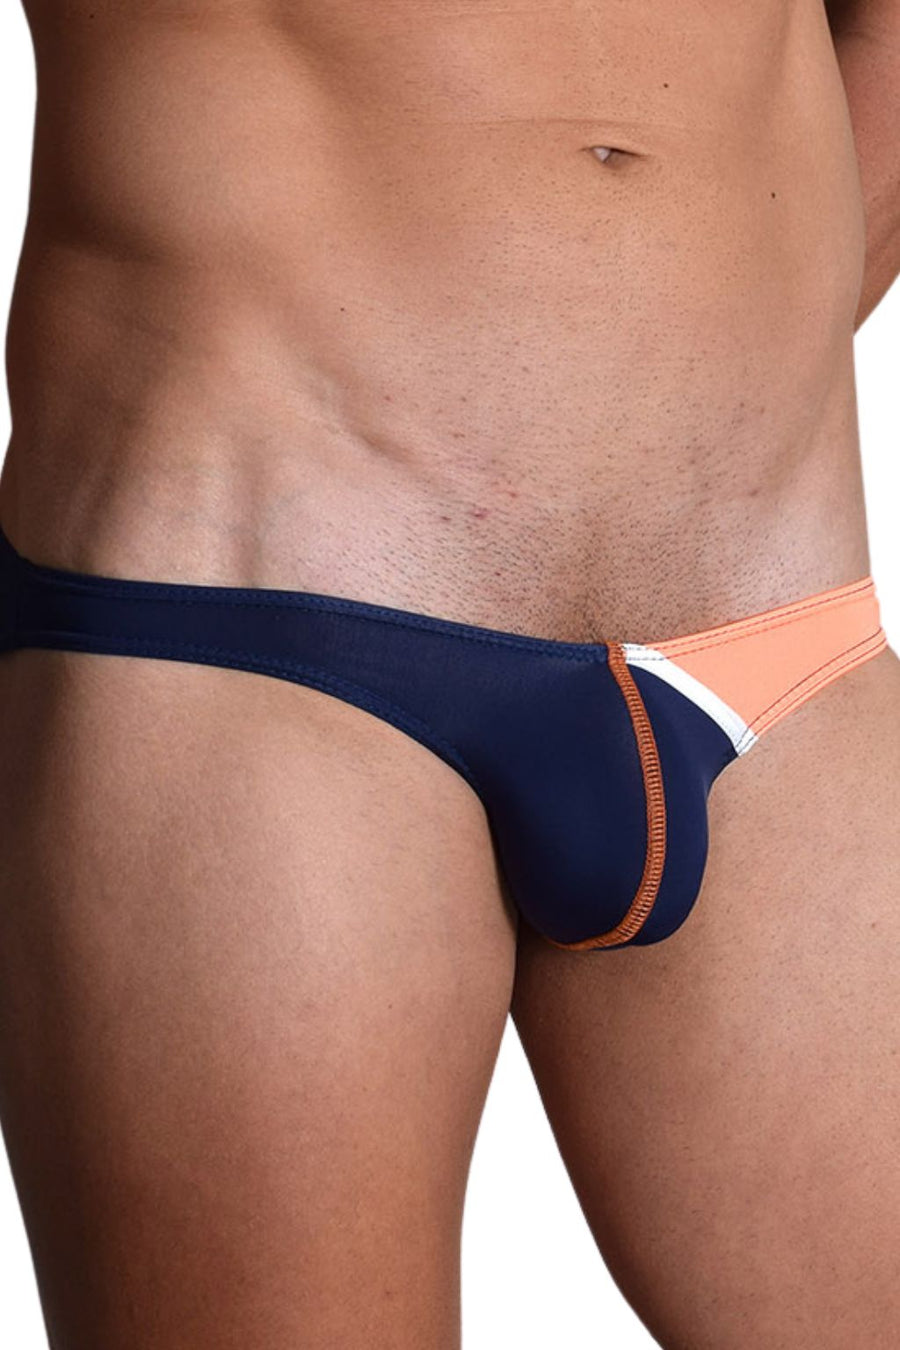 BfM Mens Micro Sheer Thong Pouch Underwear – Bodywear for Men